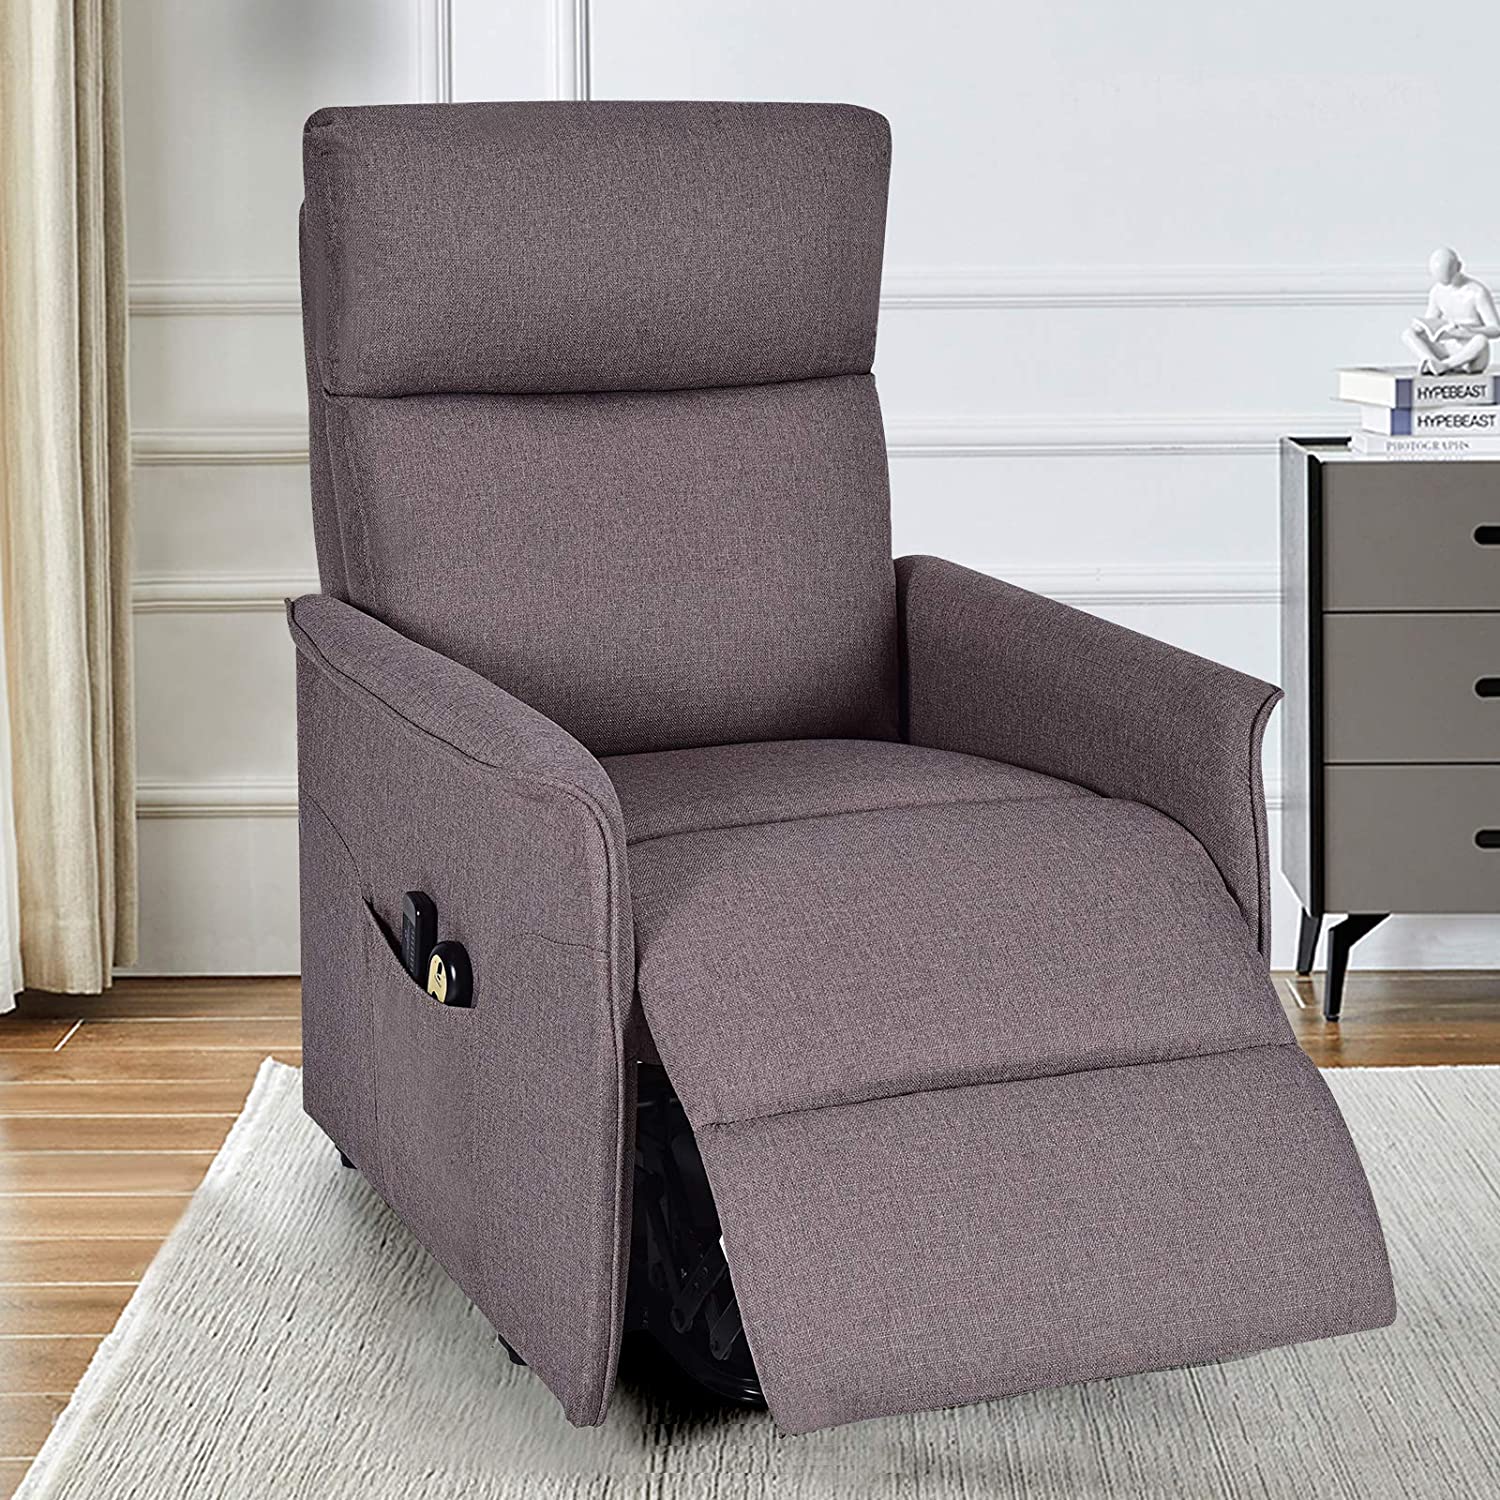 Power Lift Massage Recliner Chair for Elderly, Soft Fabric Sofa Chair